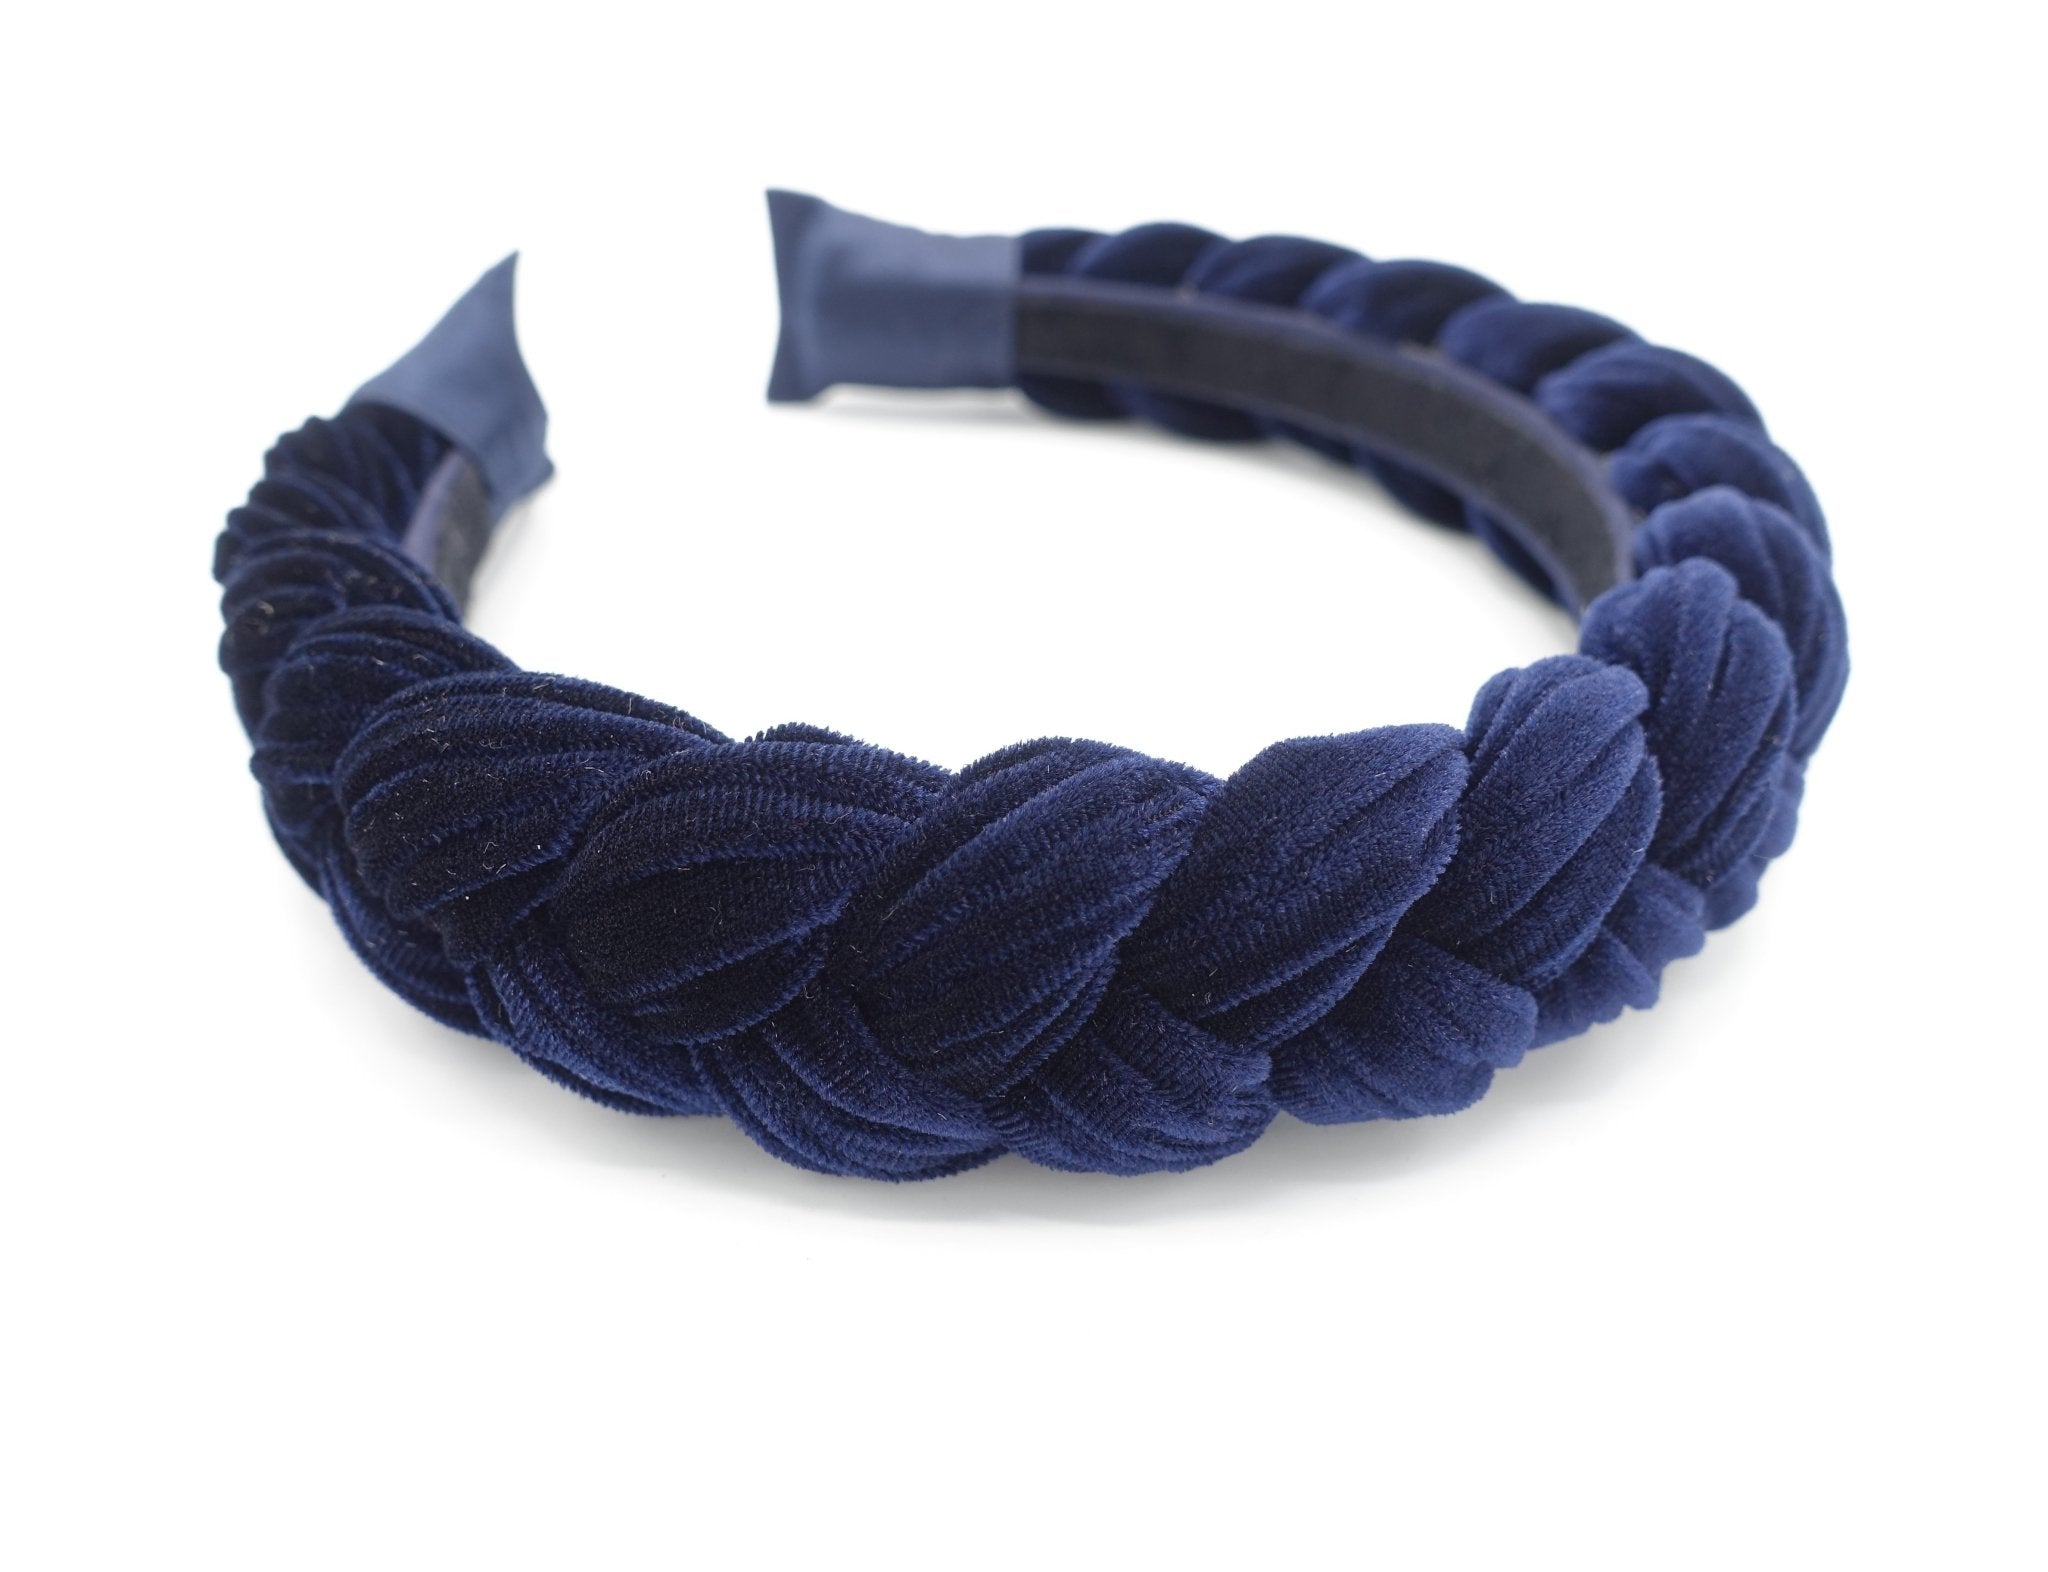 best braided headband 